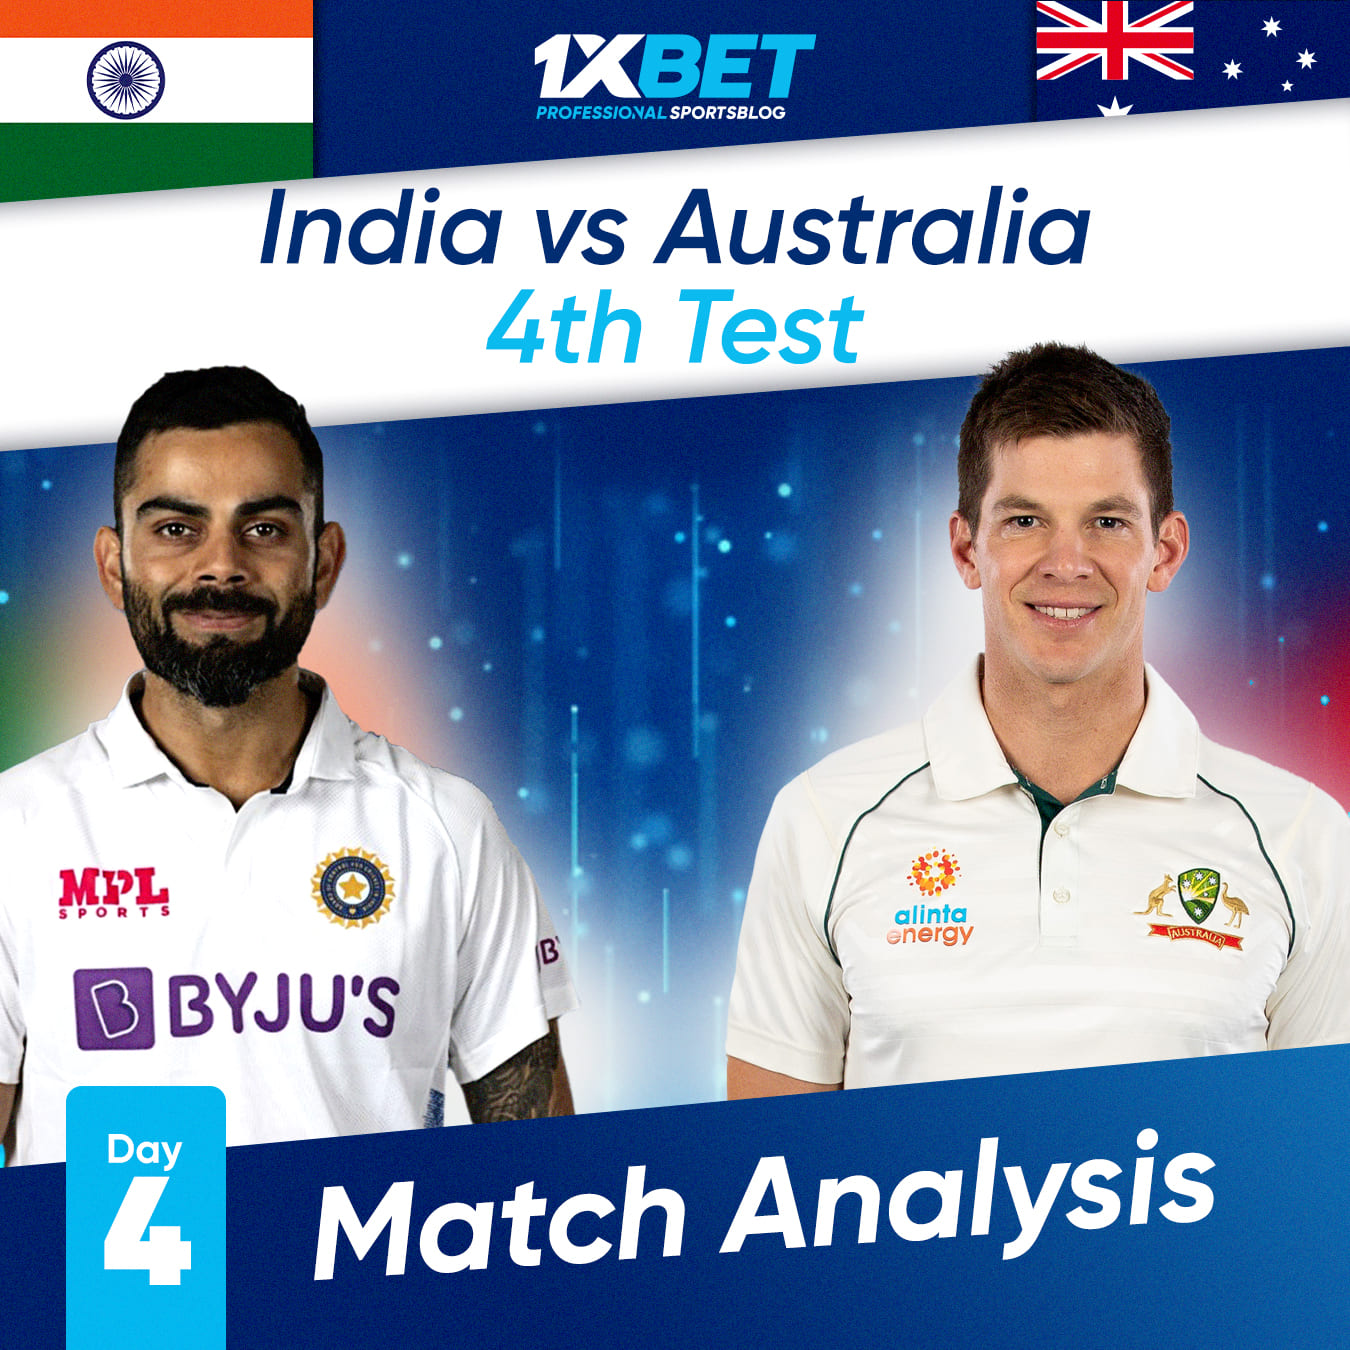 India vs Australia, 4th Test, Day 4 Match Analysis